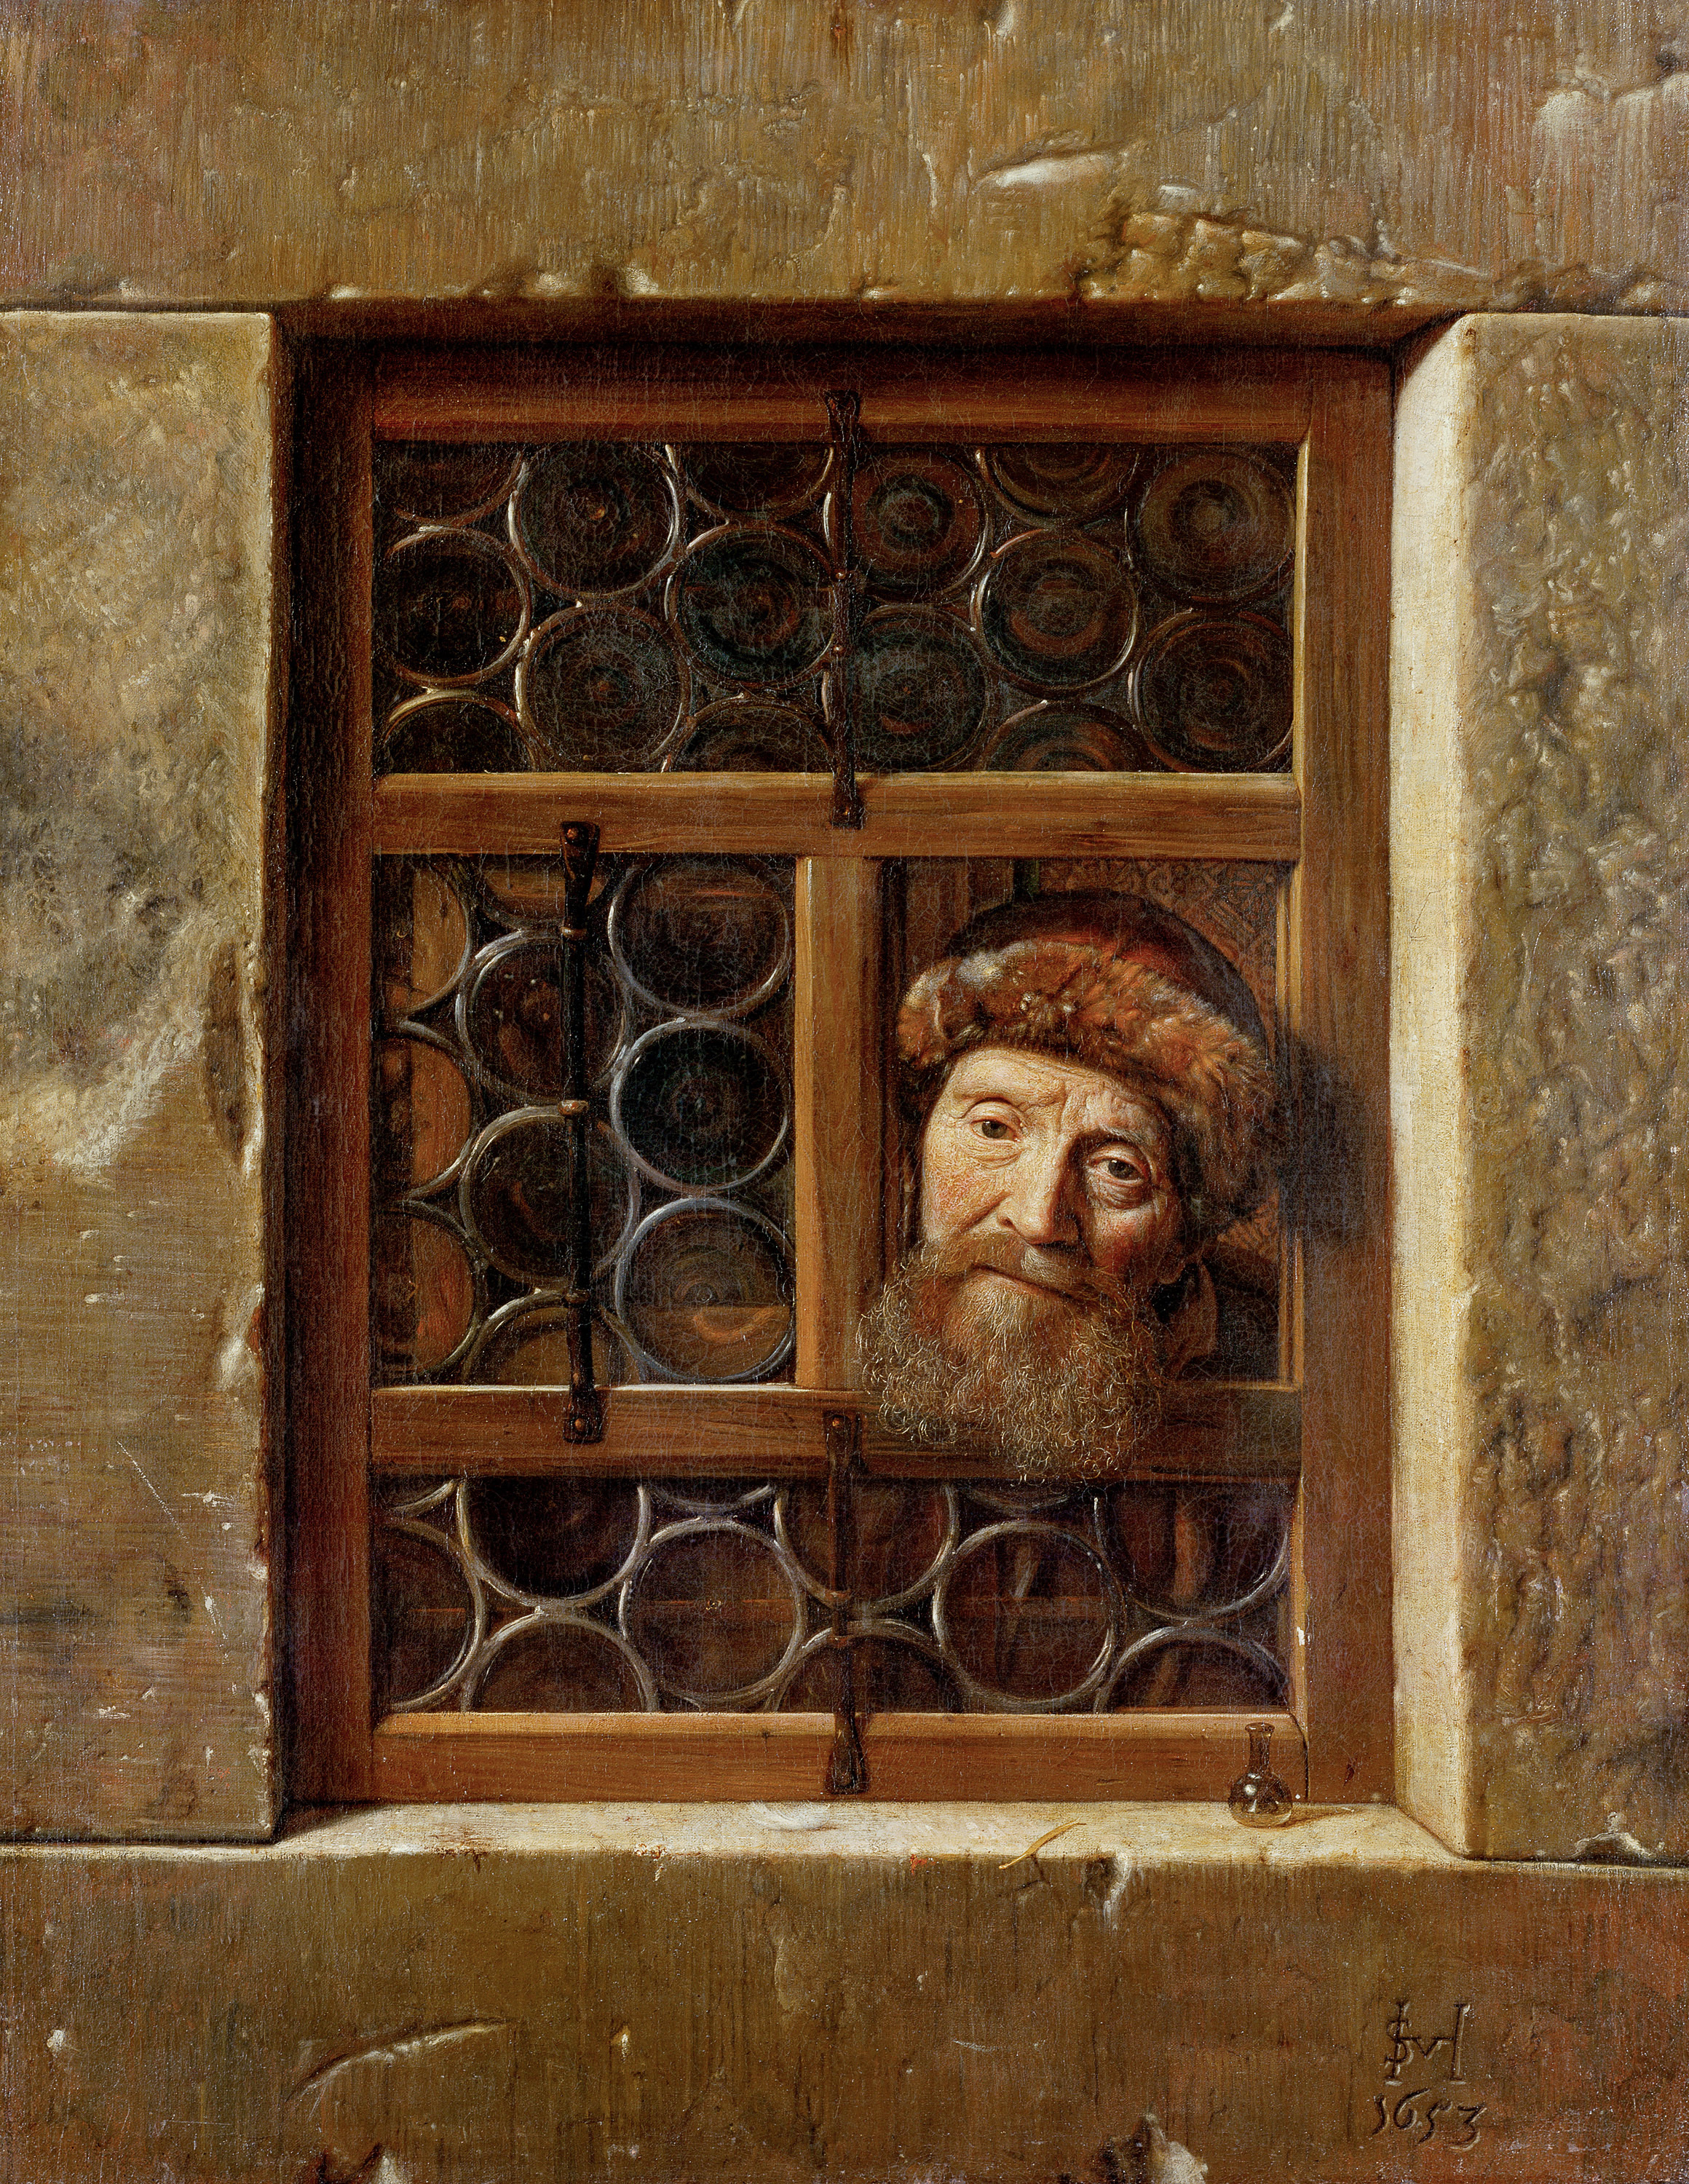 Un vecchio che guarda dalla finestra by Samuel van Hoogstraten - 1653 - 111 cm × 86,50 cm Kunsthistorisches Museum